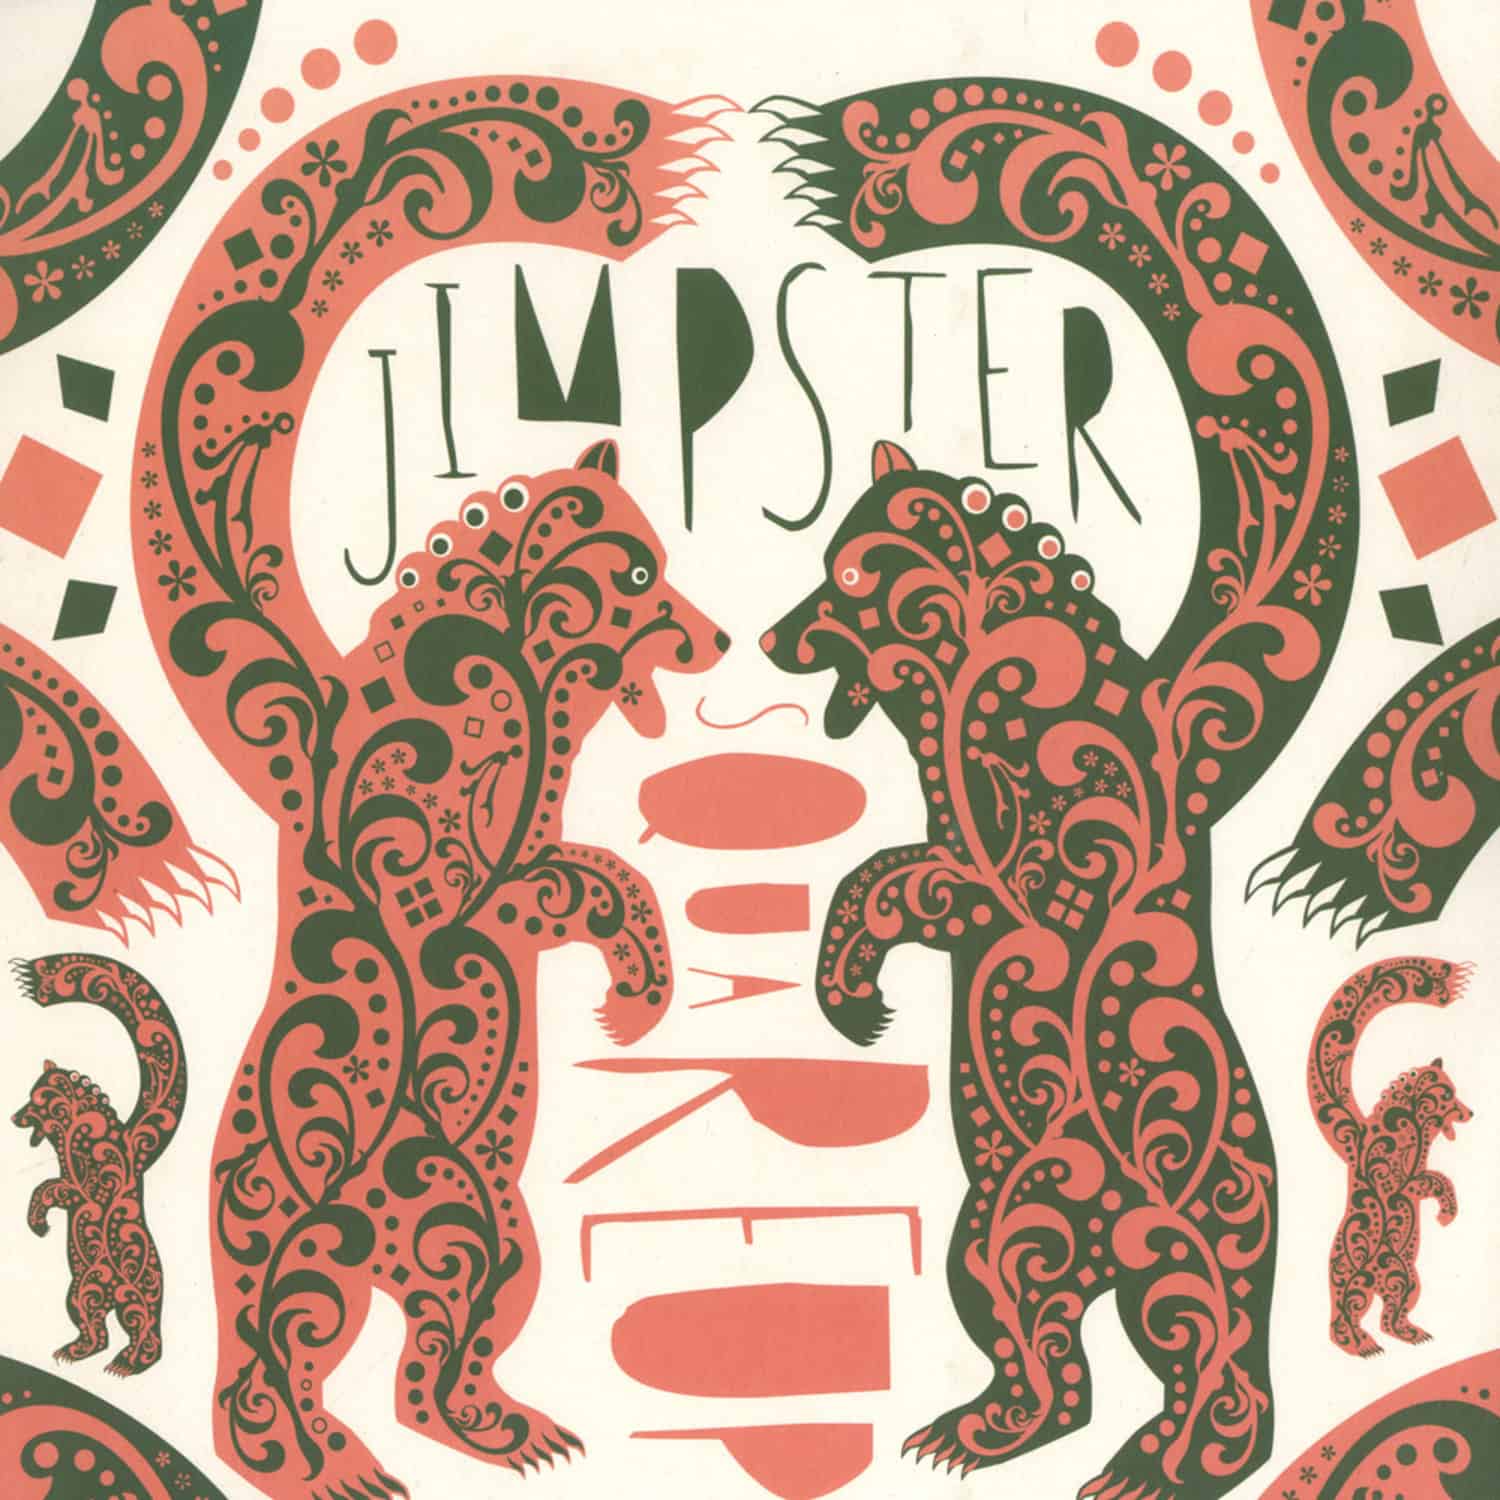 Jimpster - SQUARE UP - JOHN TEJADA REMIX